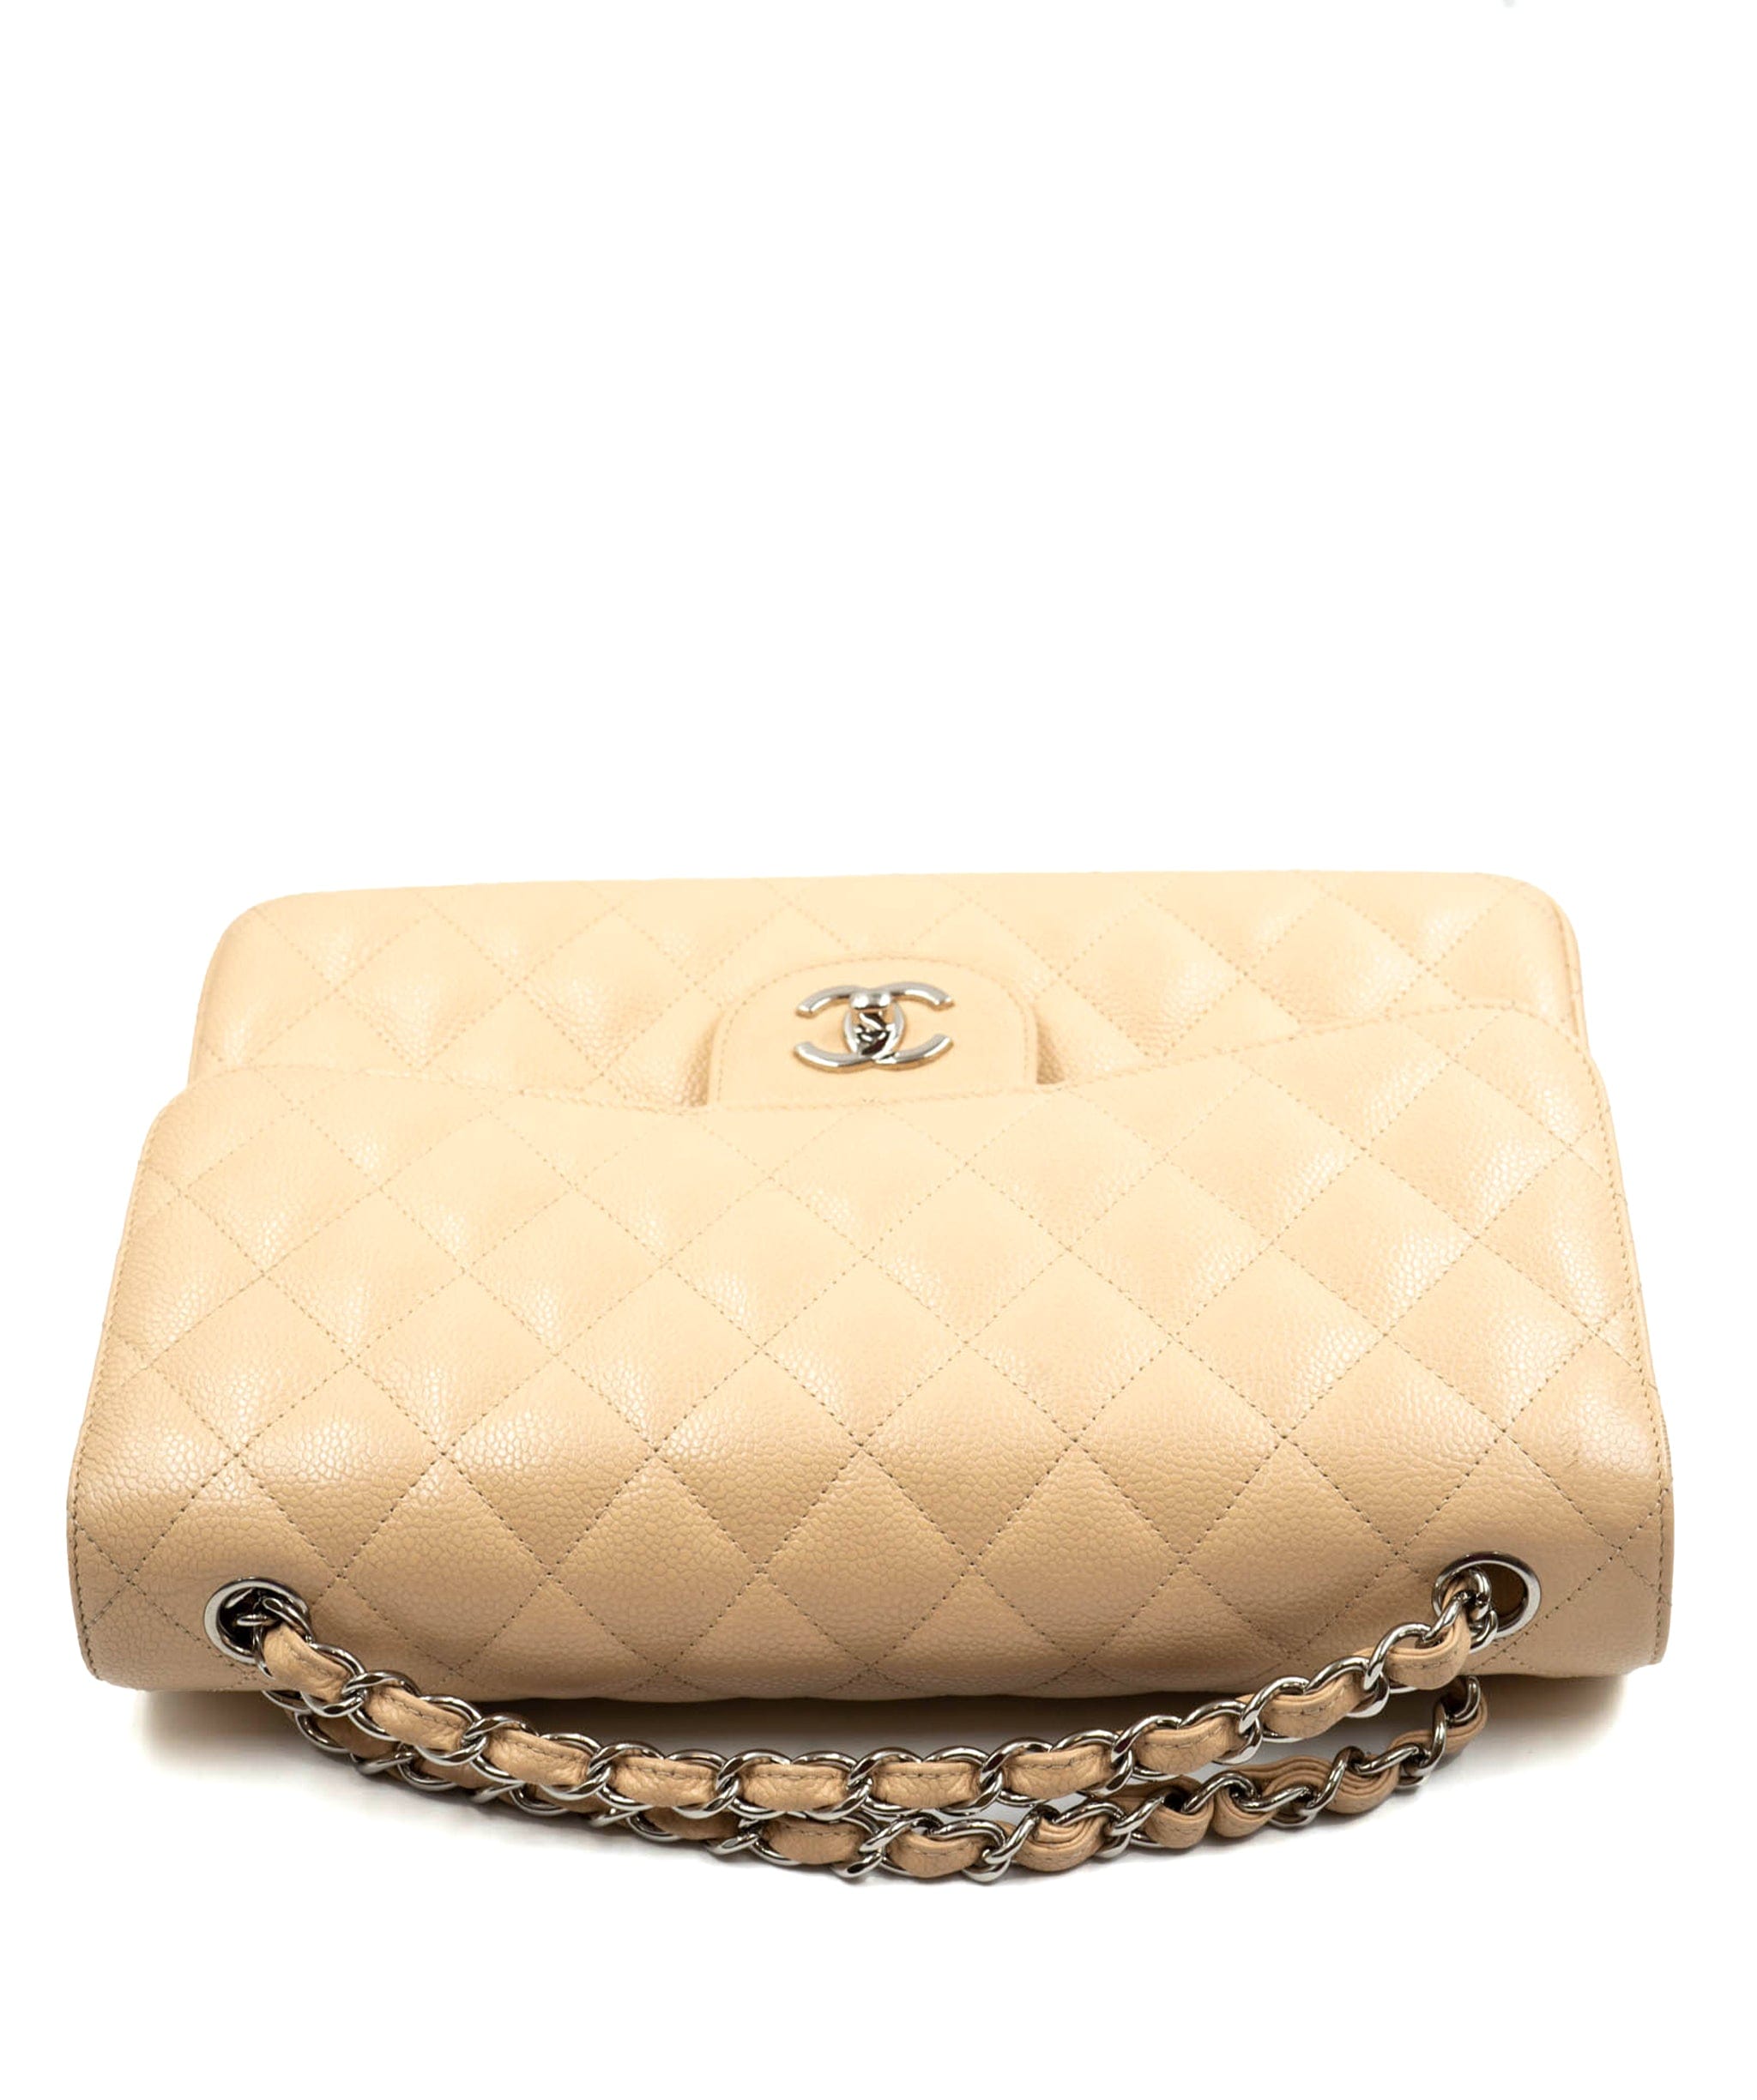 Chanel Chanel Jumbo Caviar Classic Flap with PHW ASL4850